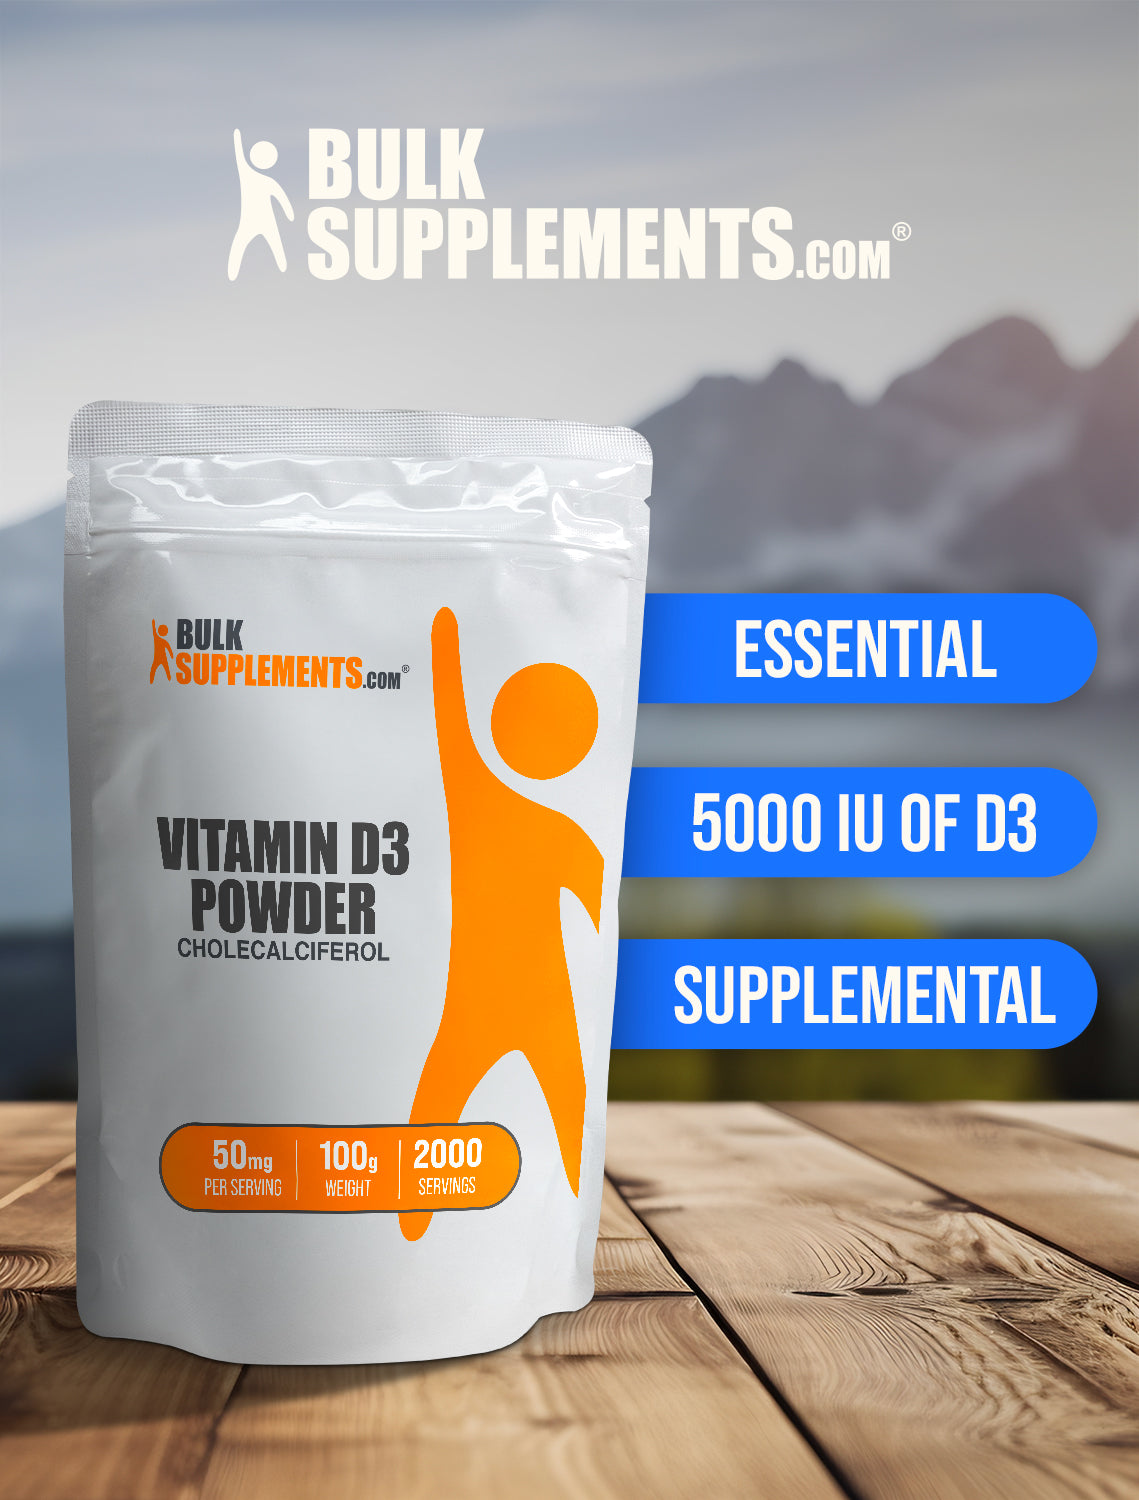 Vitamin D3 powder keyword image 100g